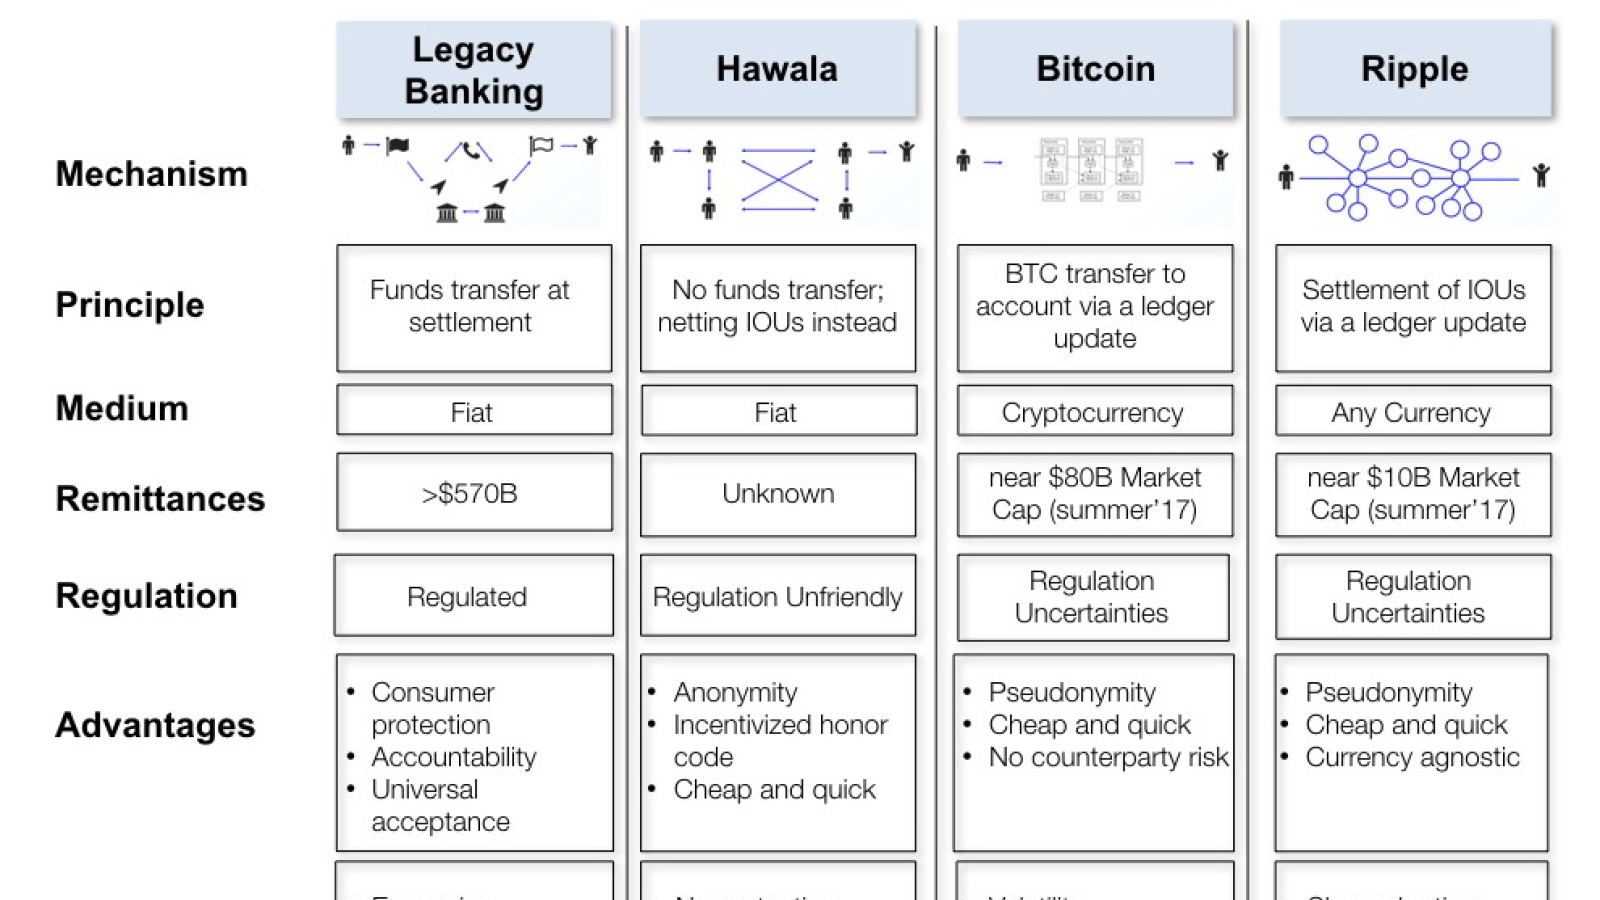 Principles and differences Bitcoin Ripple Hawala